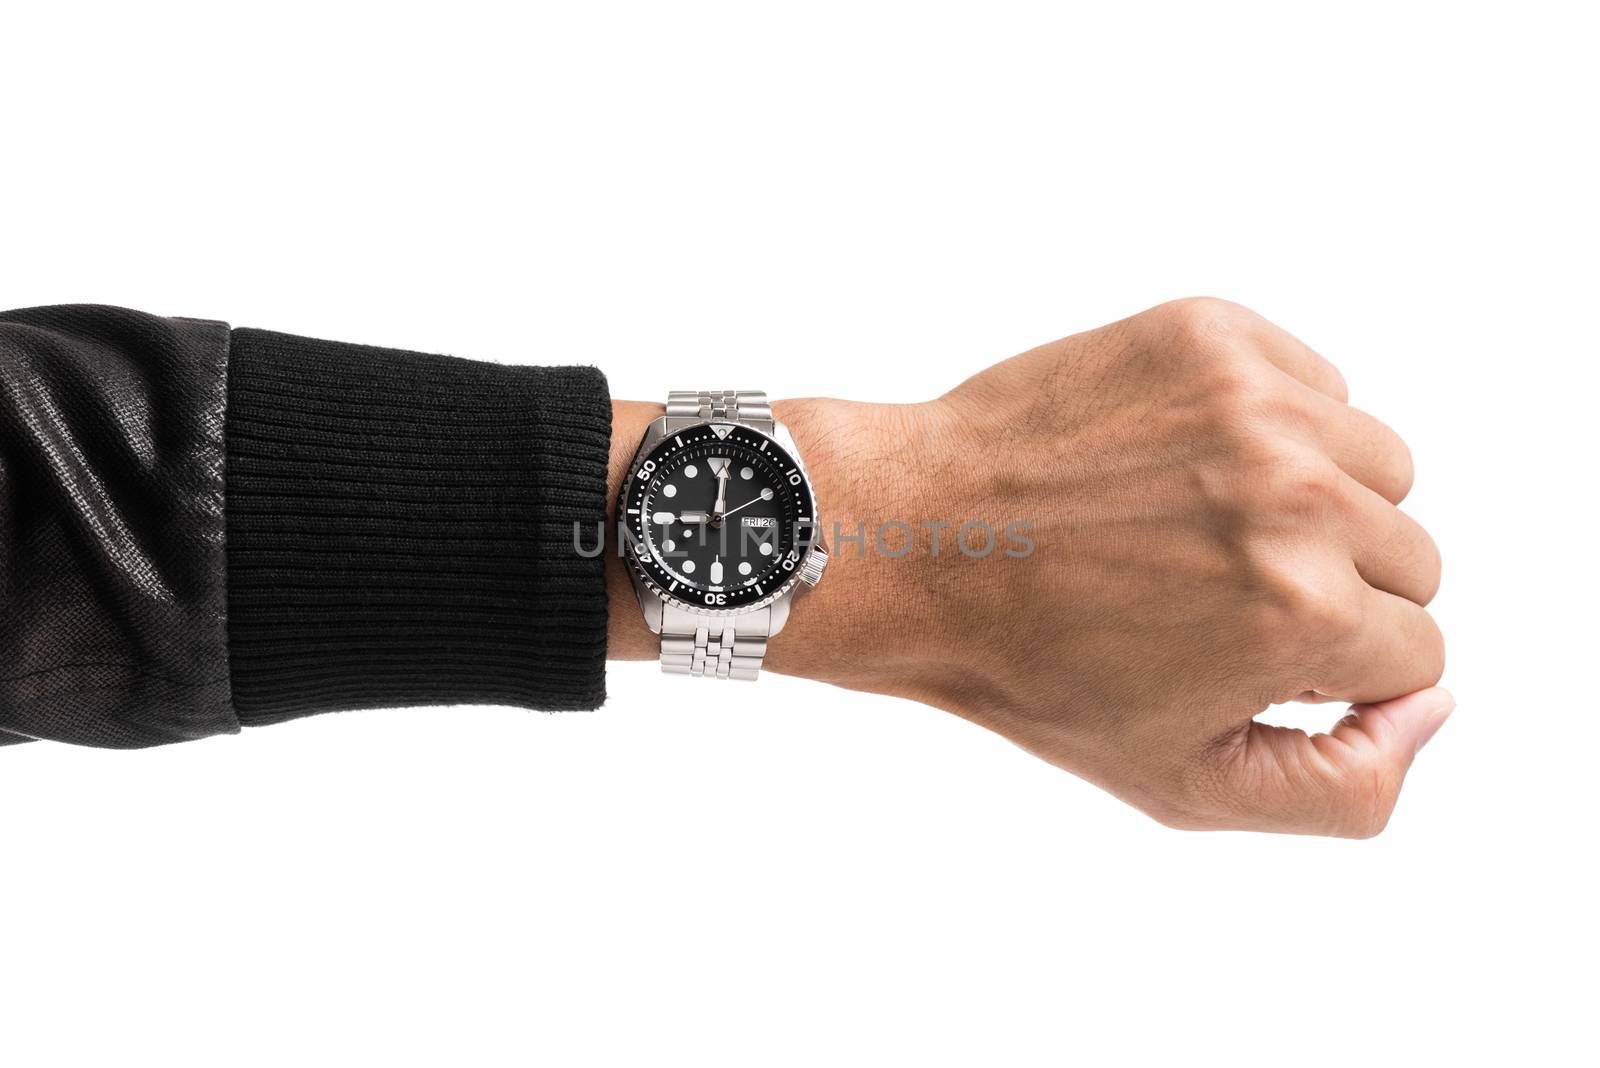 luxury watch on man's wrist over white background